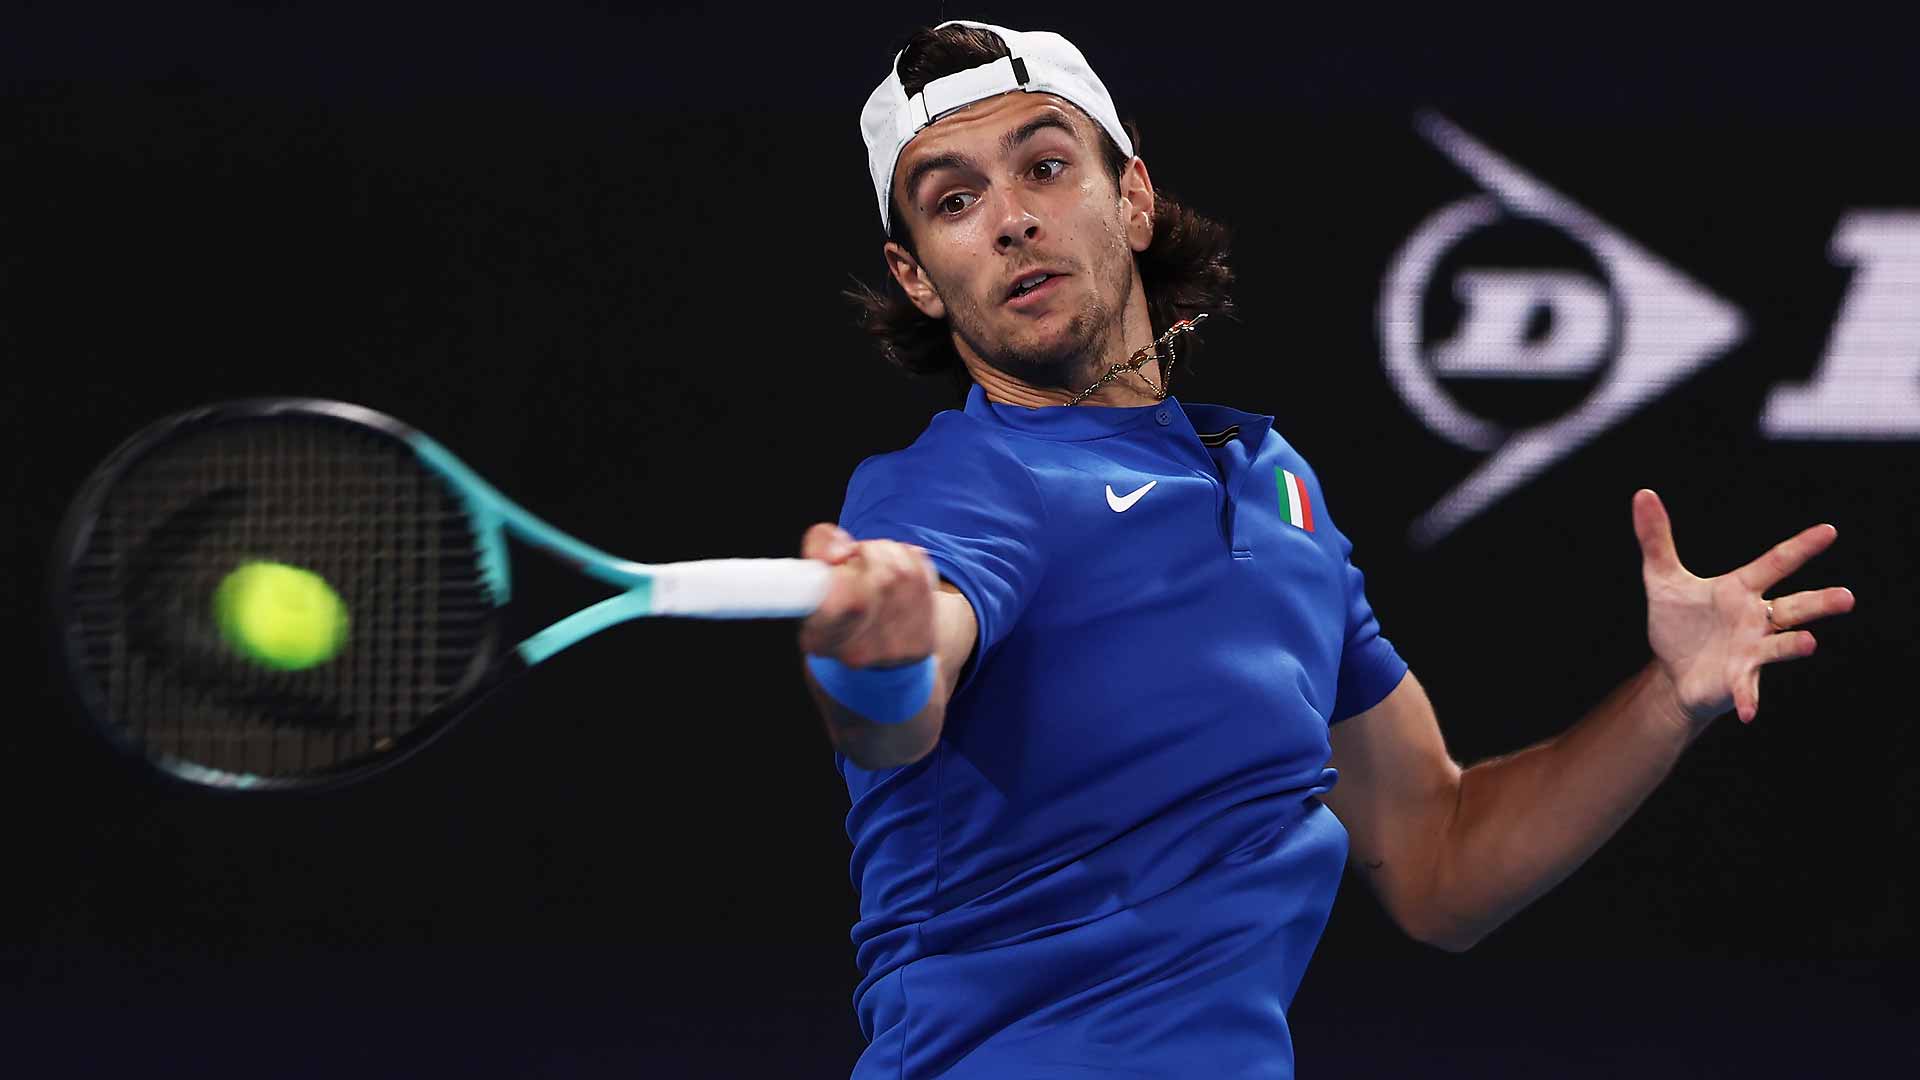 Musetti extiende la ventaja de Italia después de la victoria épica de Trevisan contra Zaccari |  Circuito ATP